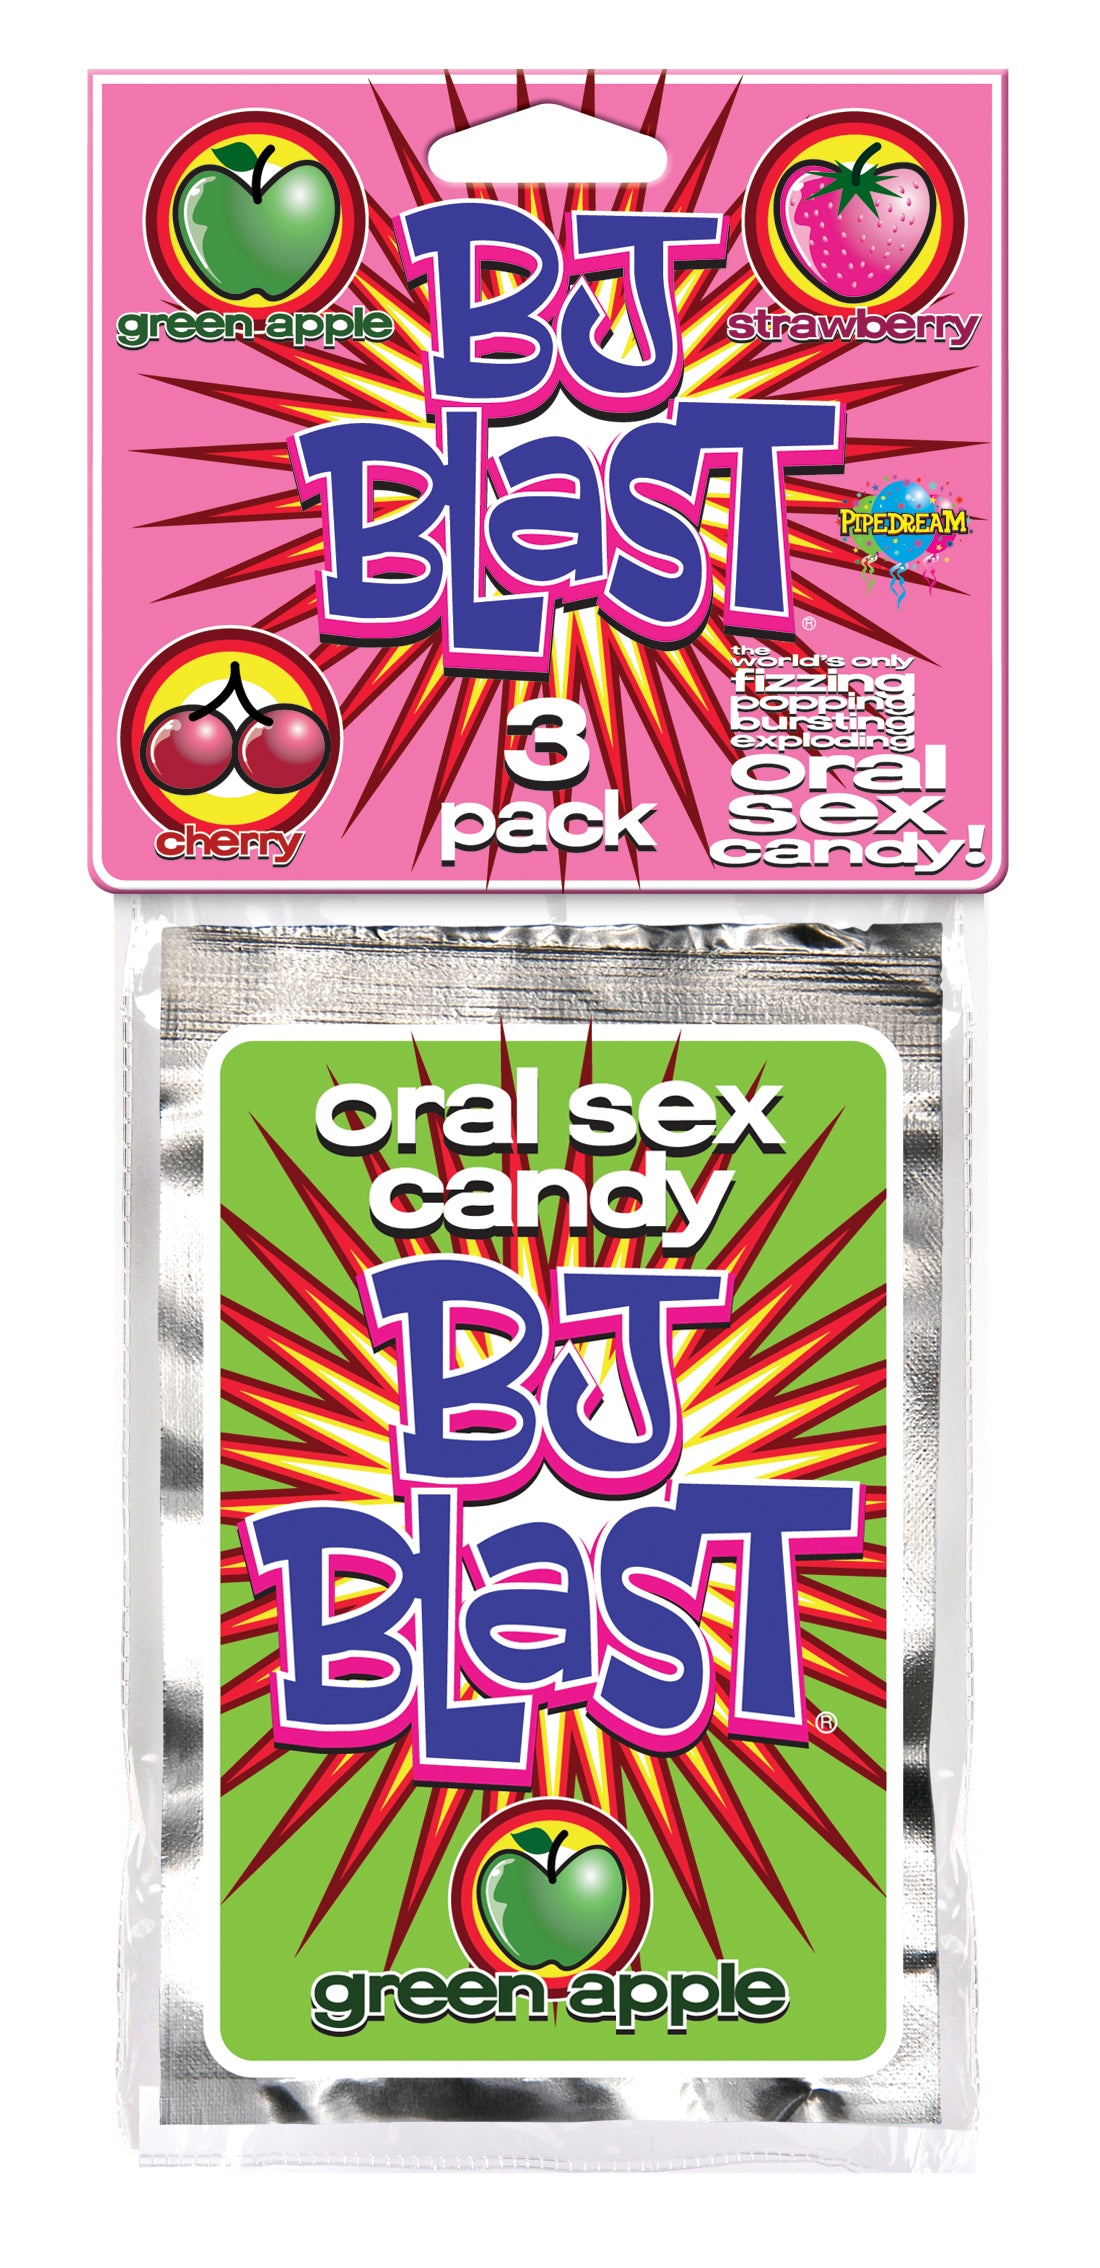 Experience Sensational Oral Pleasure with BJ Blast 3-Pack